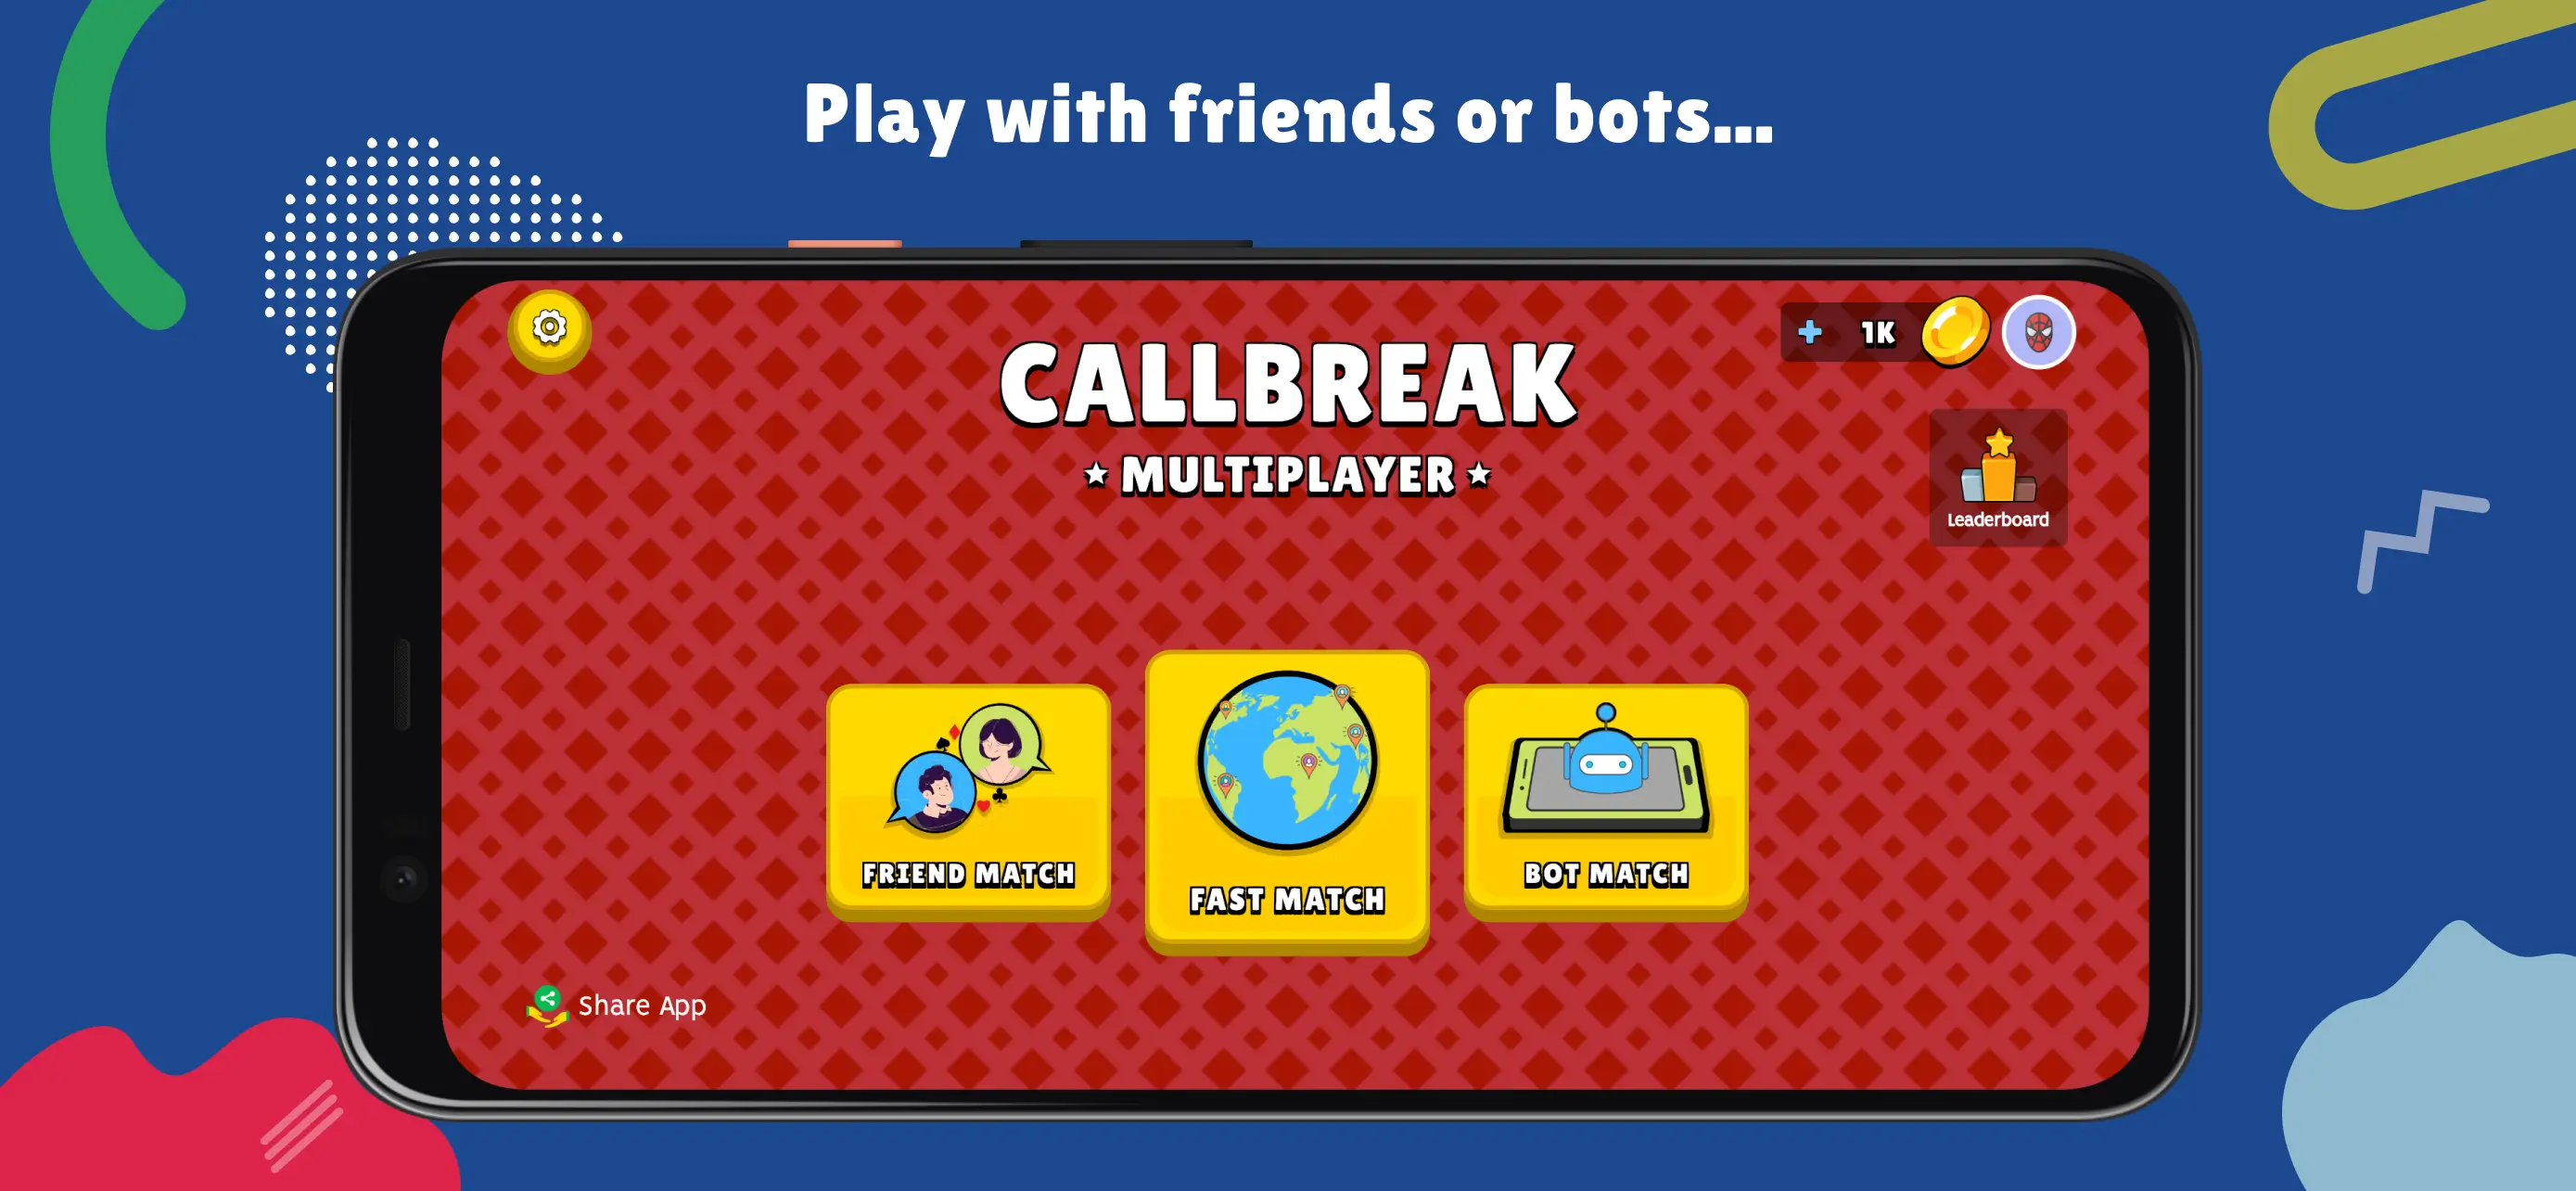 Callbreak Multiplayer Screenshot 2